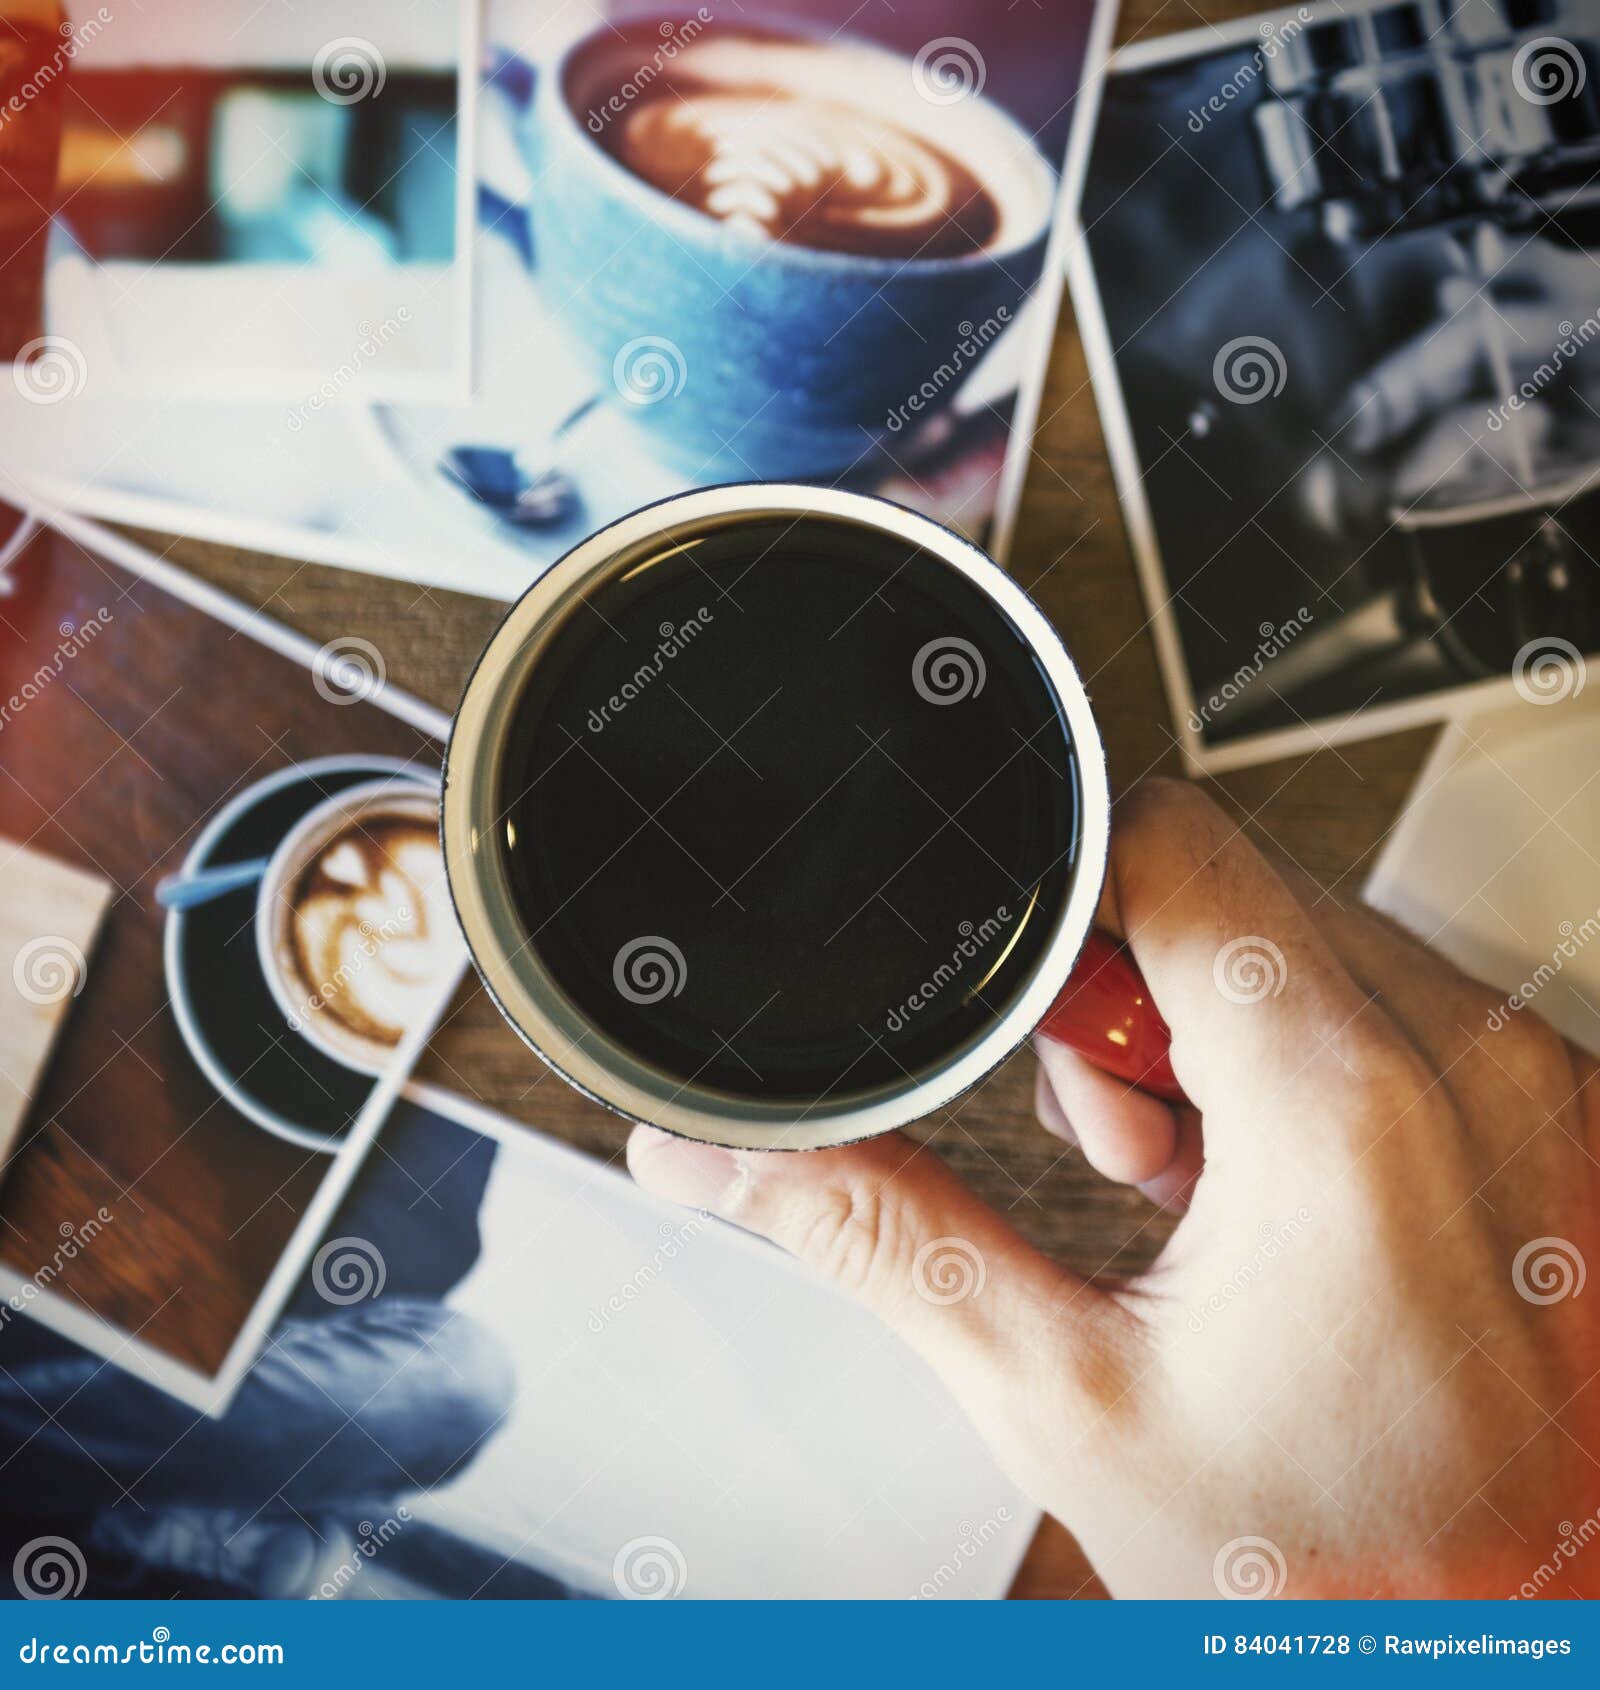 cafe coffee break americano espresso photography concept